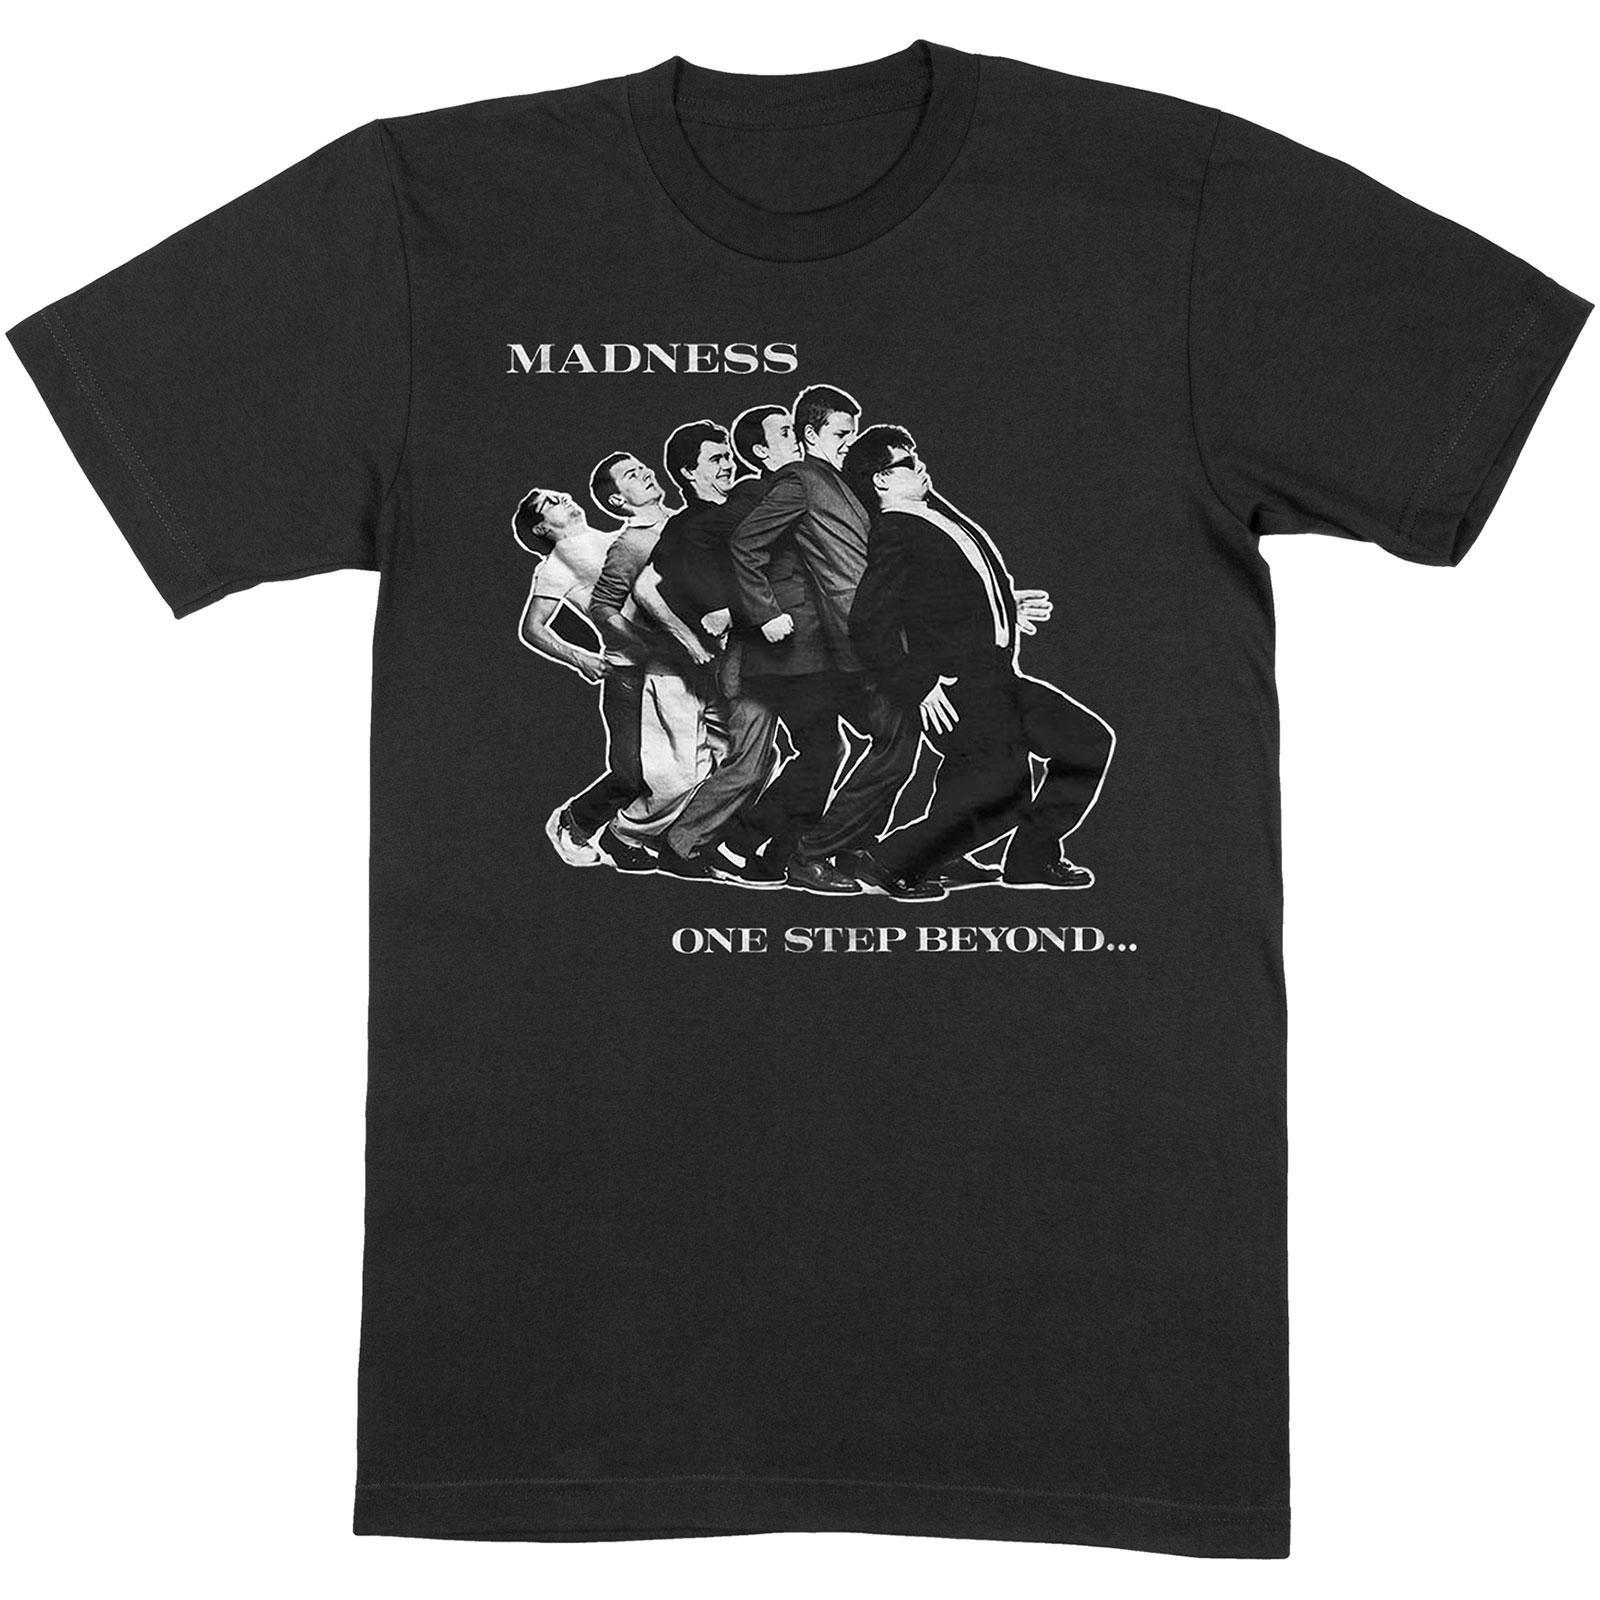 Madness Unisex Adult One Step Beyond Cotton T-Shirt (Black) (L)